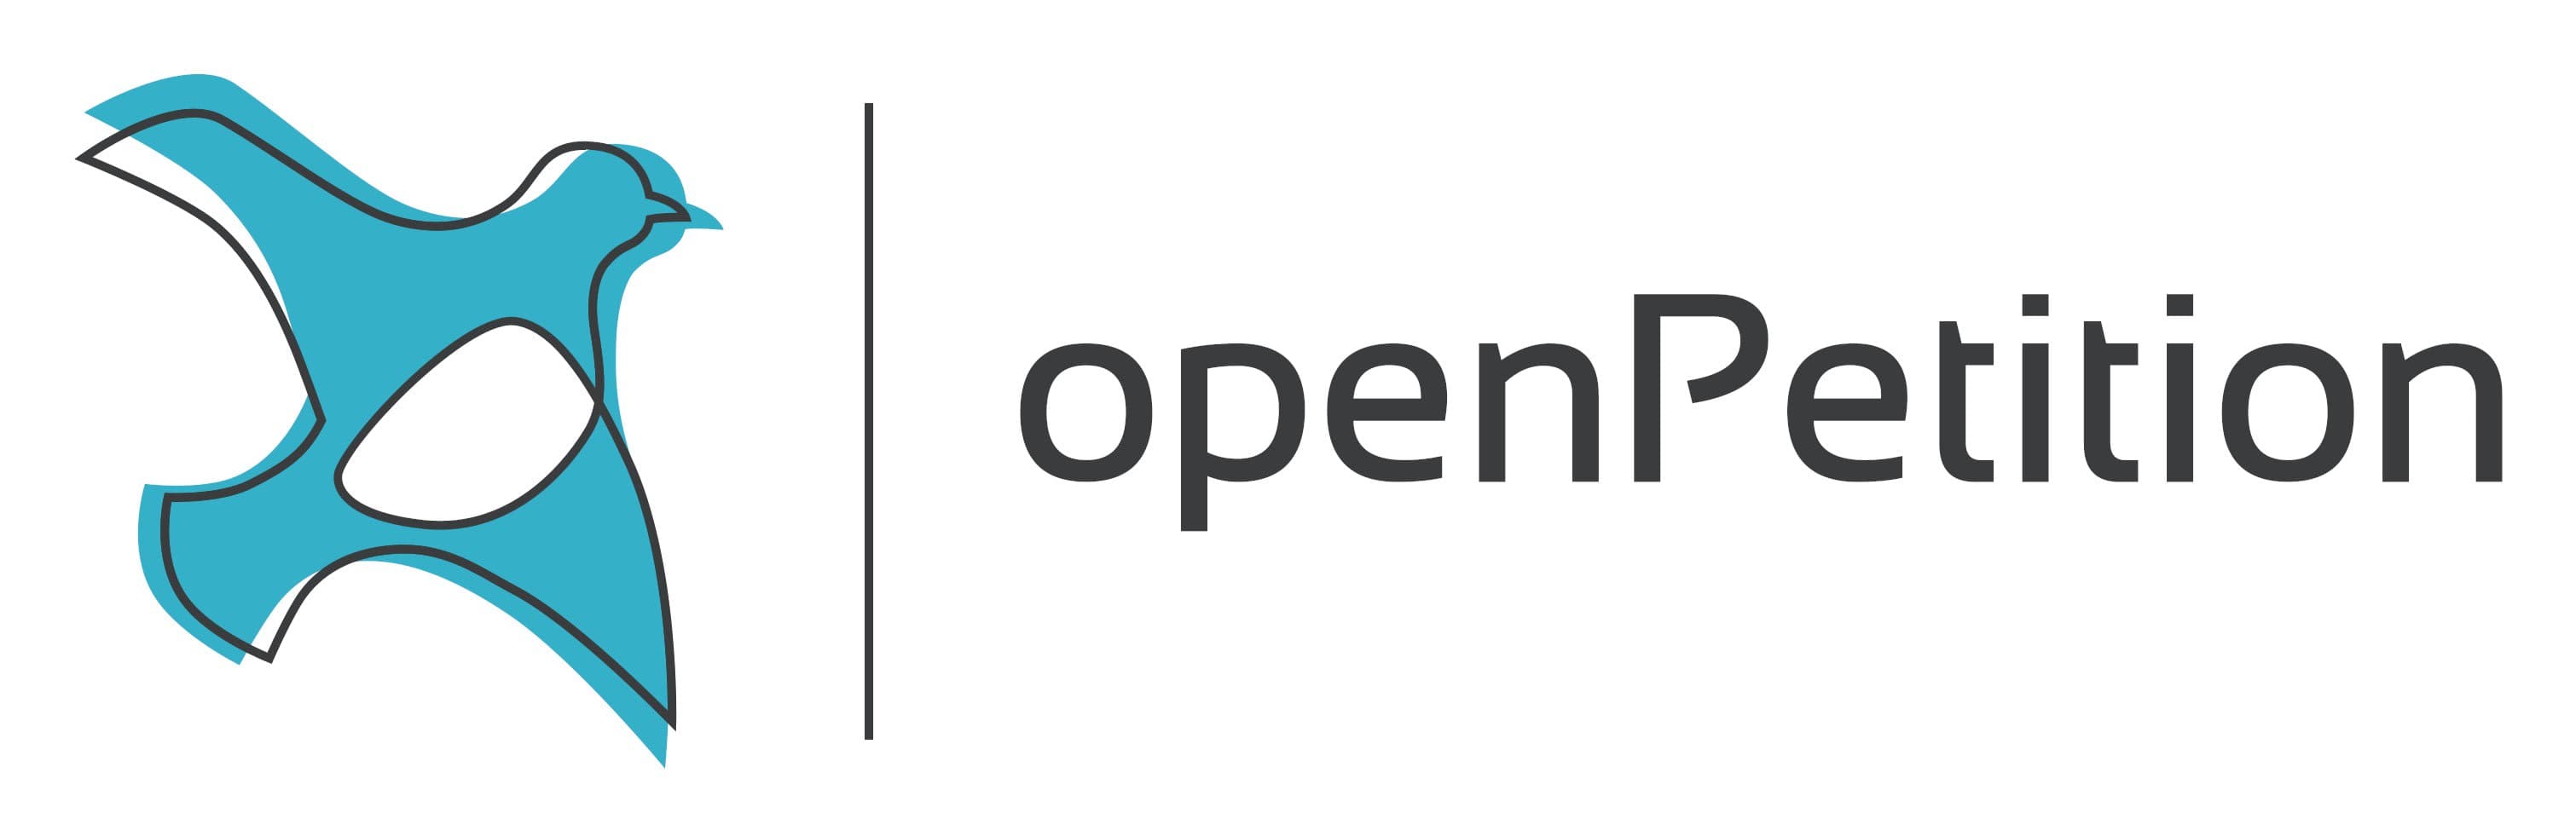 openPetition-logo